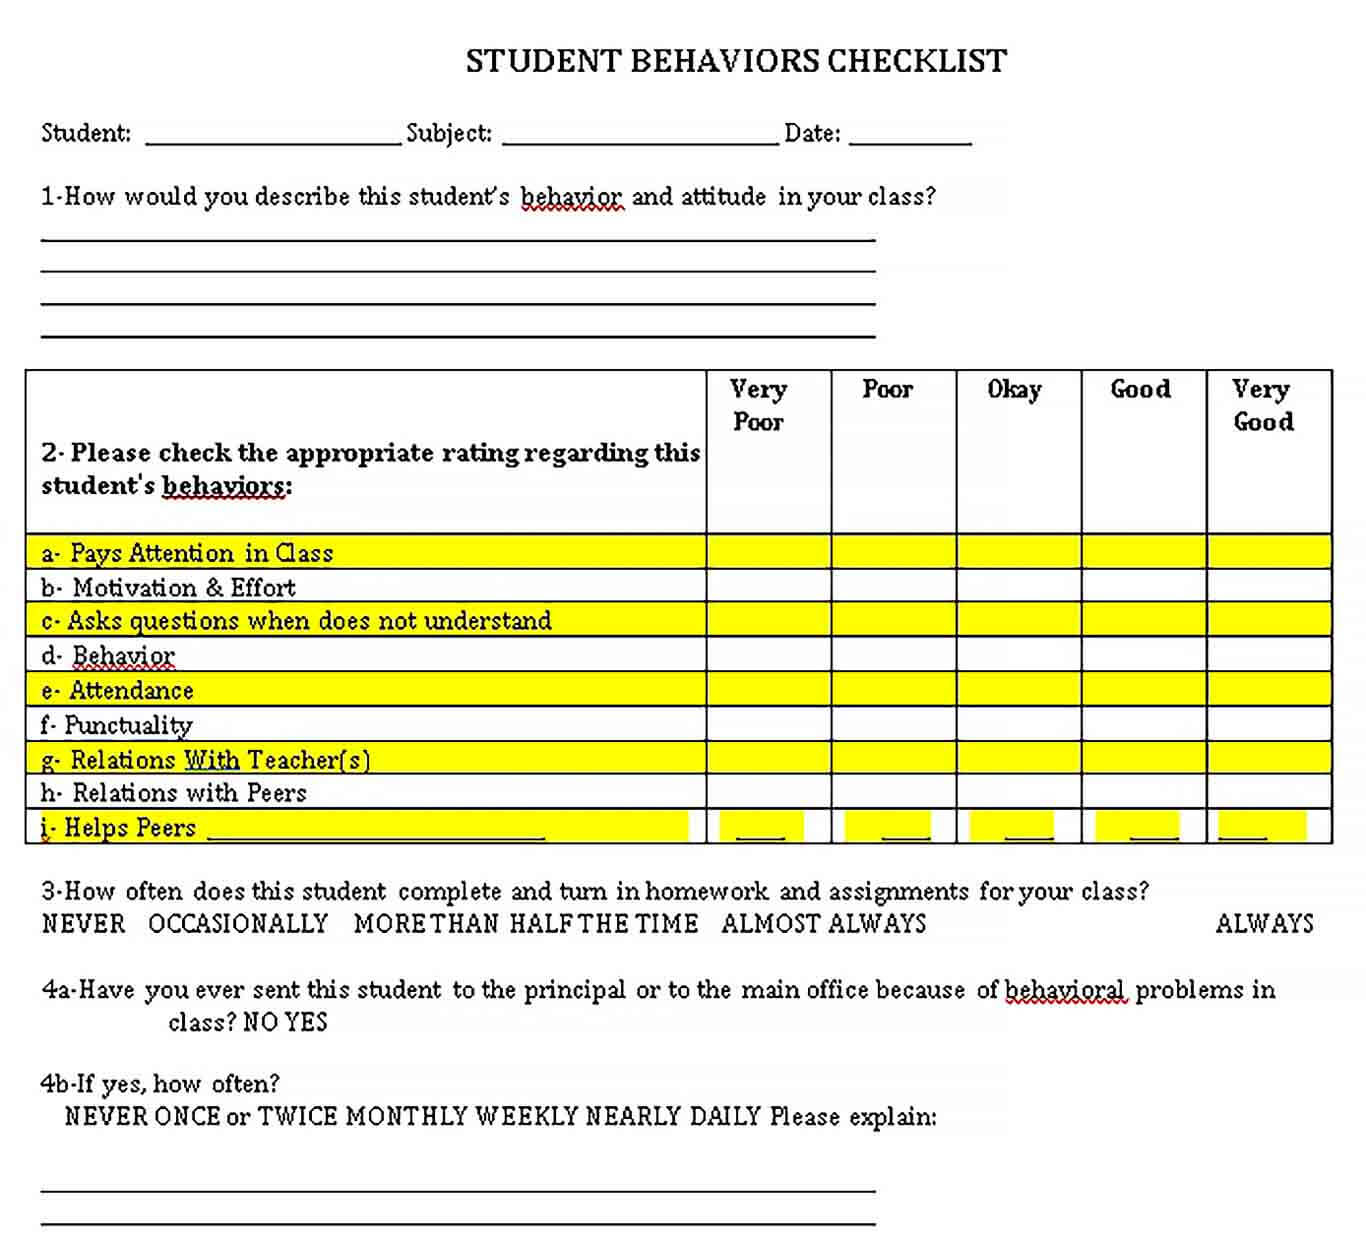 Behavior Checklist Template  In Student Behavior Checklist Template Regarding Student Behavior Checklist Template